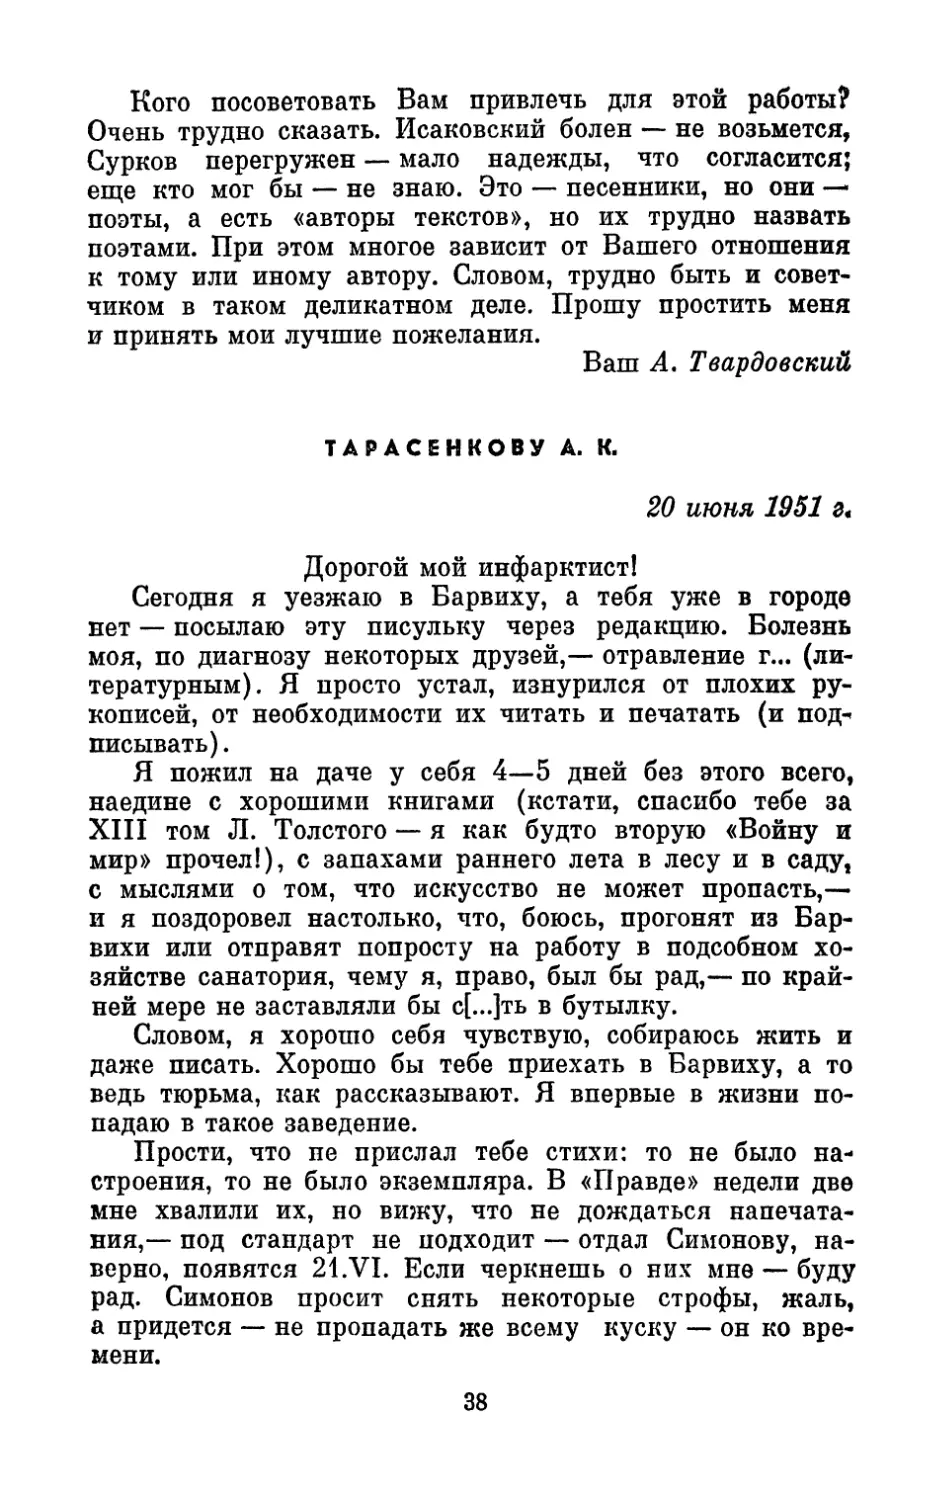 Тарасенкову А. К., 20 июня 1951 г.